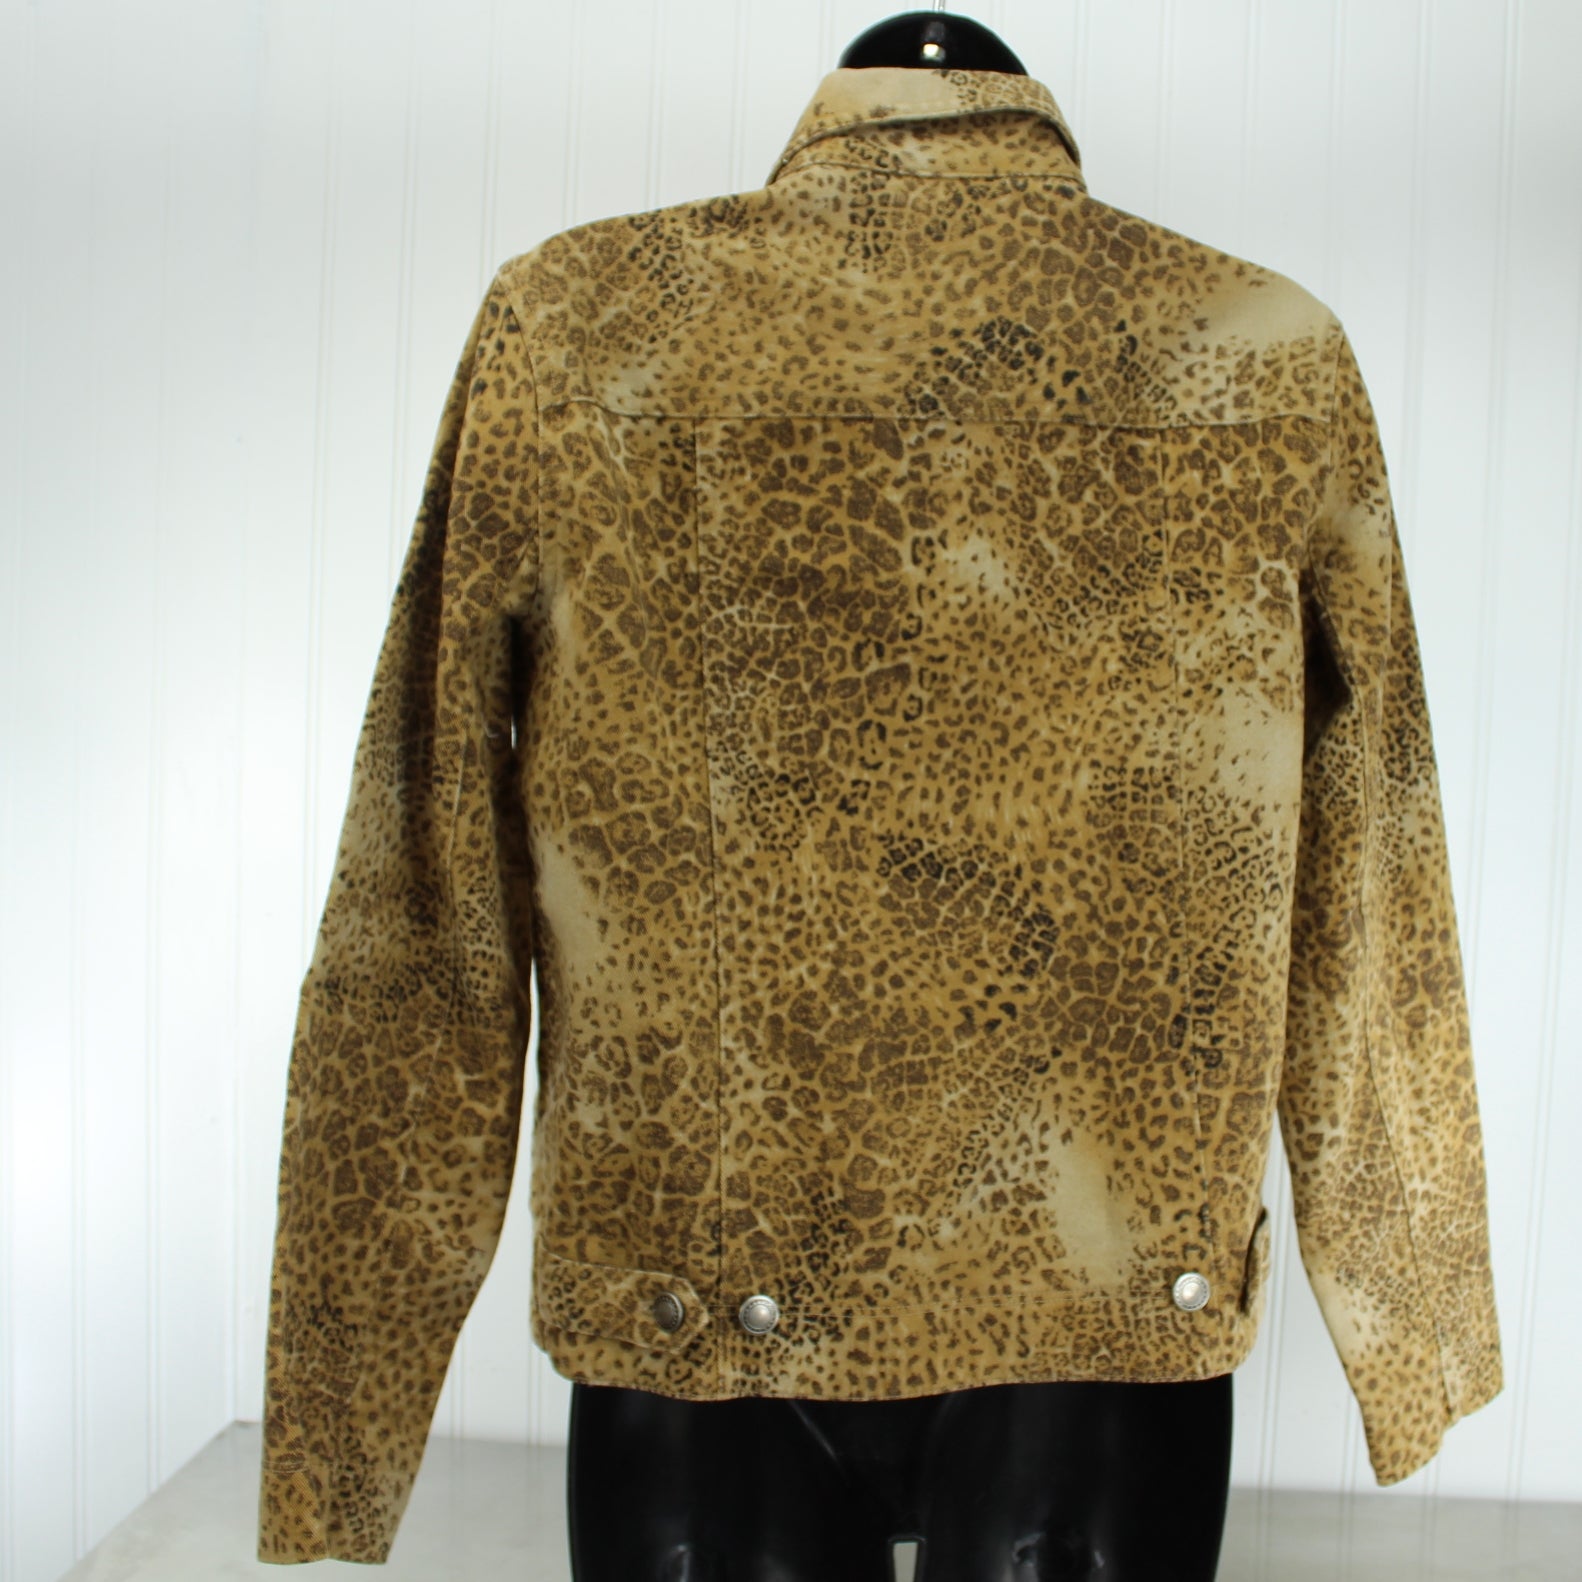 Chico's Design Leopard Print Cotton Jacket Adjustable Band Waist Chico Size 0 animal print jacket